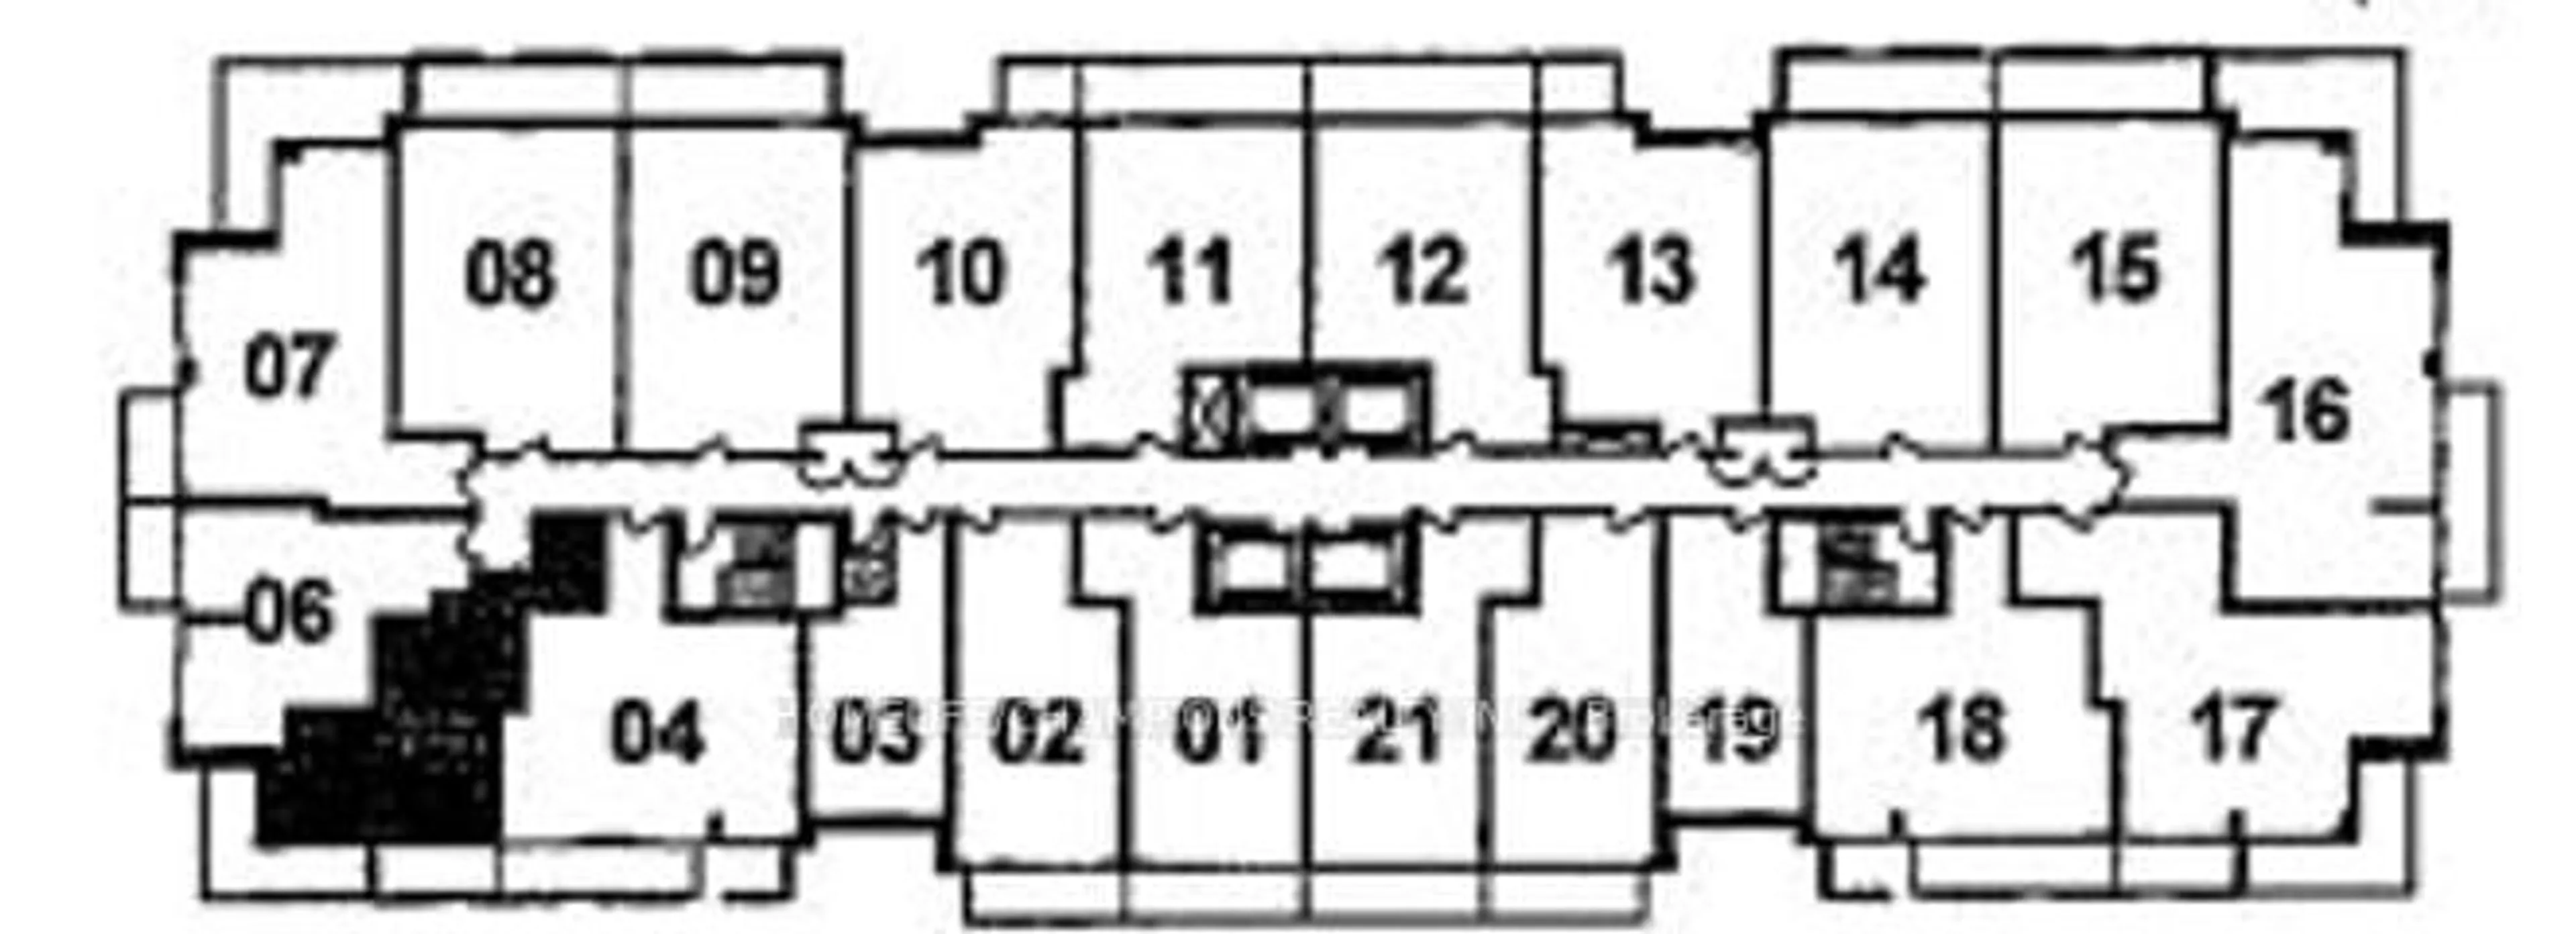 Floor plan for 2550 Simcoe St #2005, Oshawa Ontario L1L 0R5